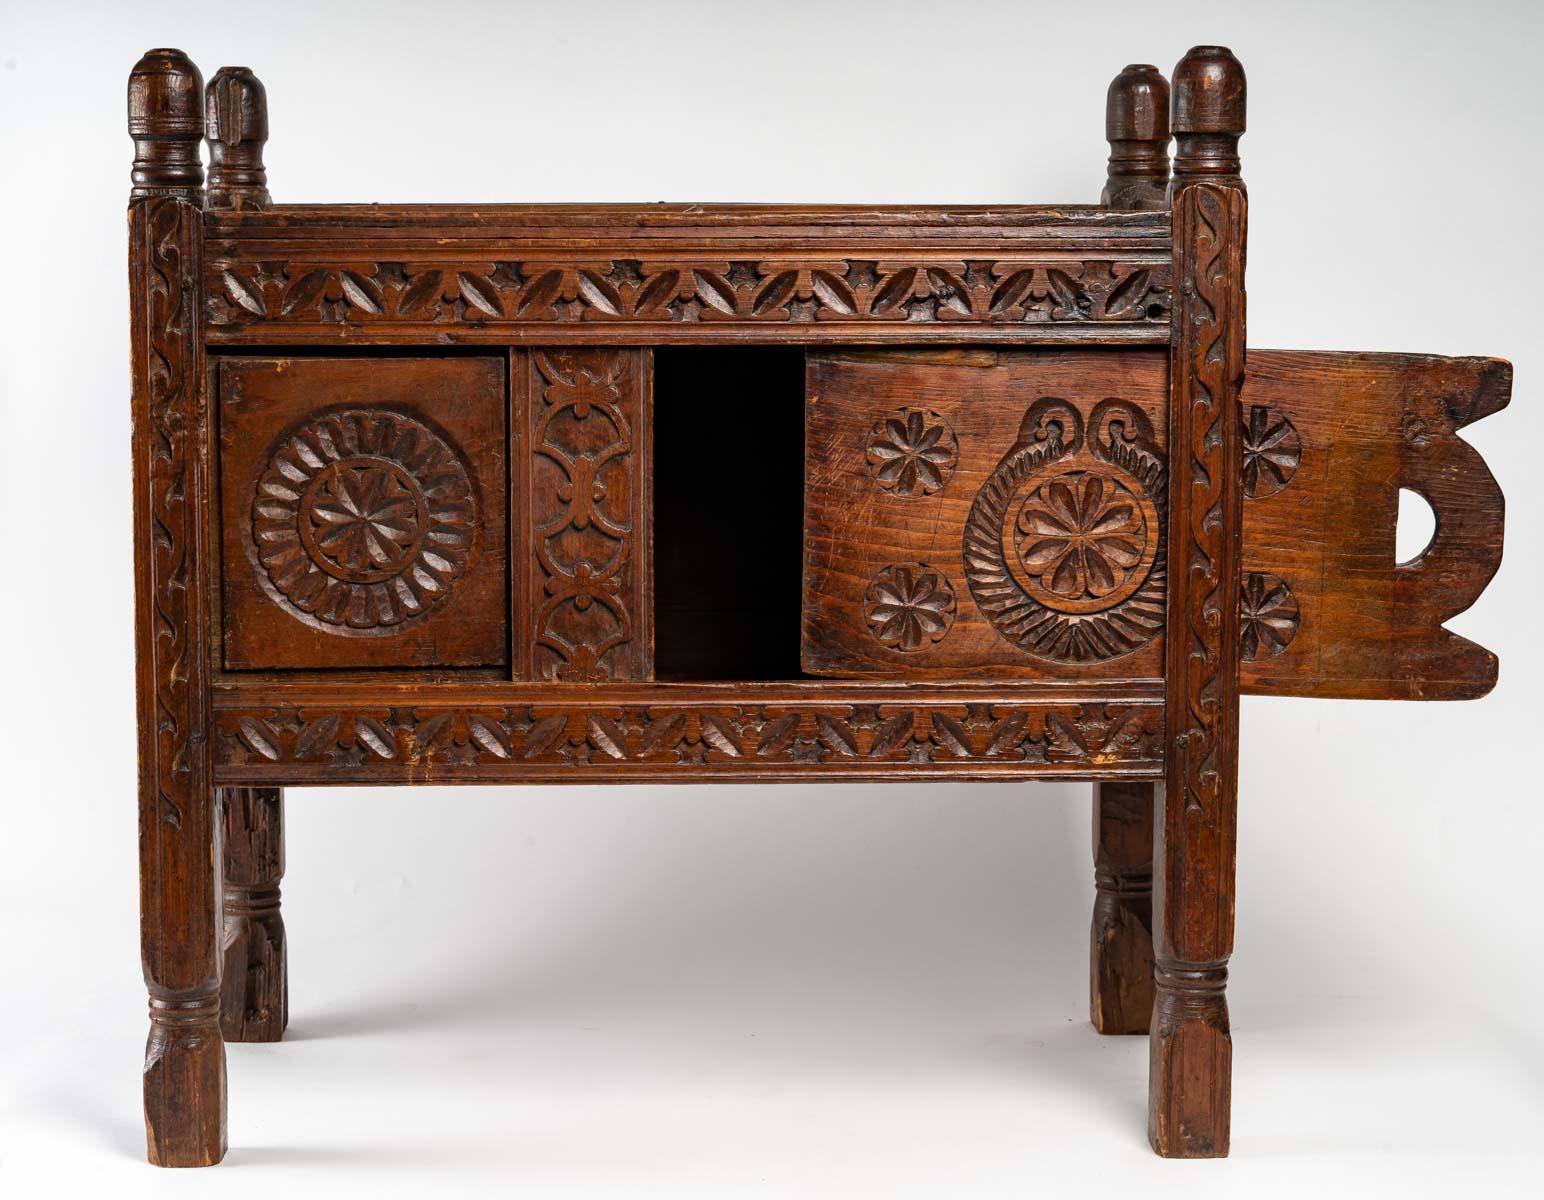 Afghan Wedding Furniture, Late 18th Century